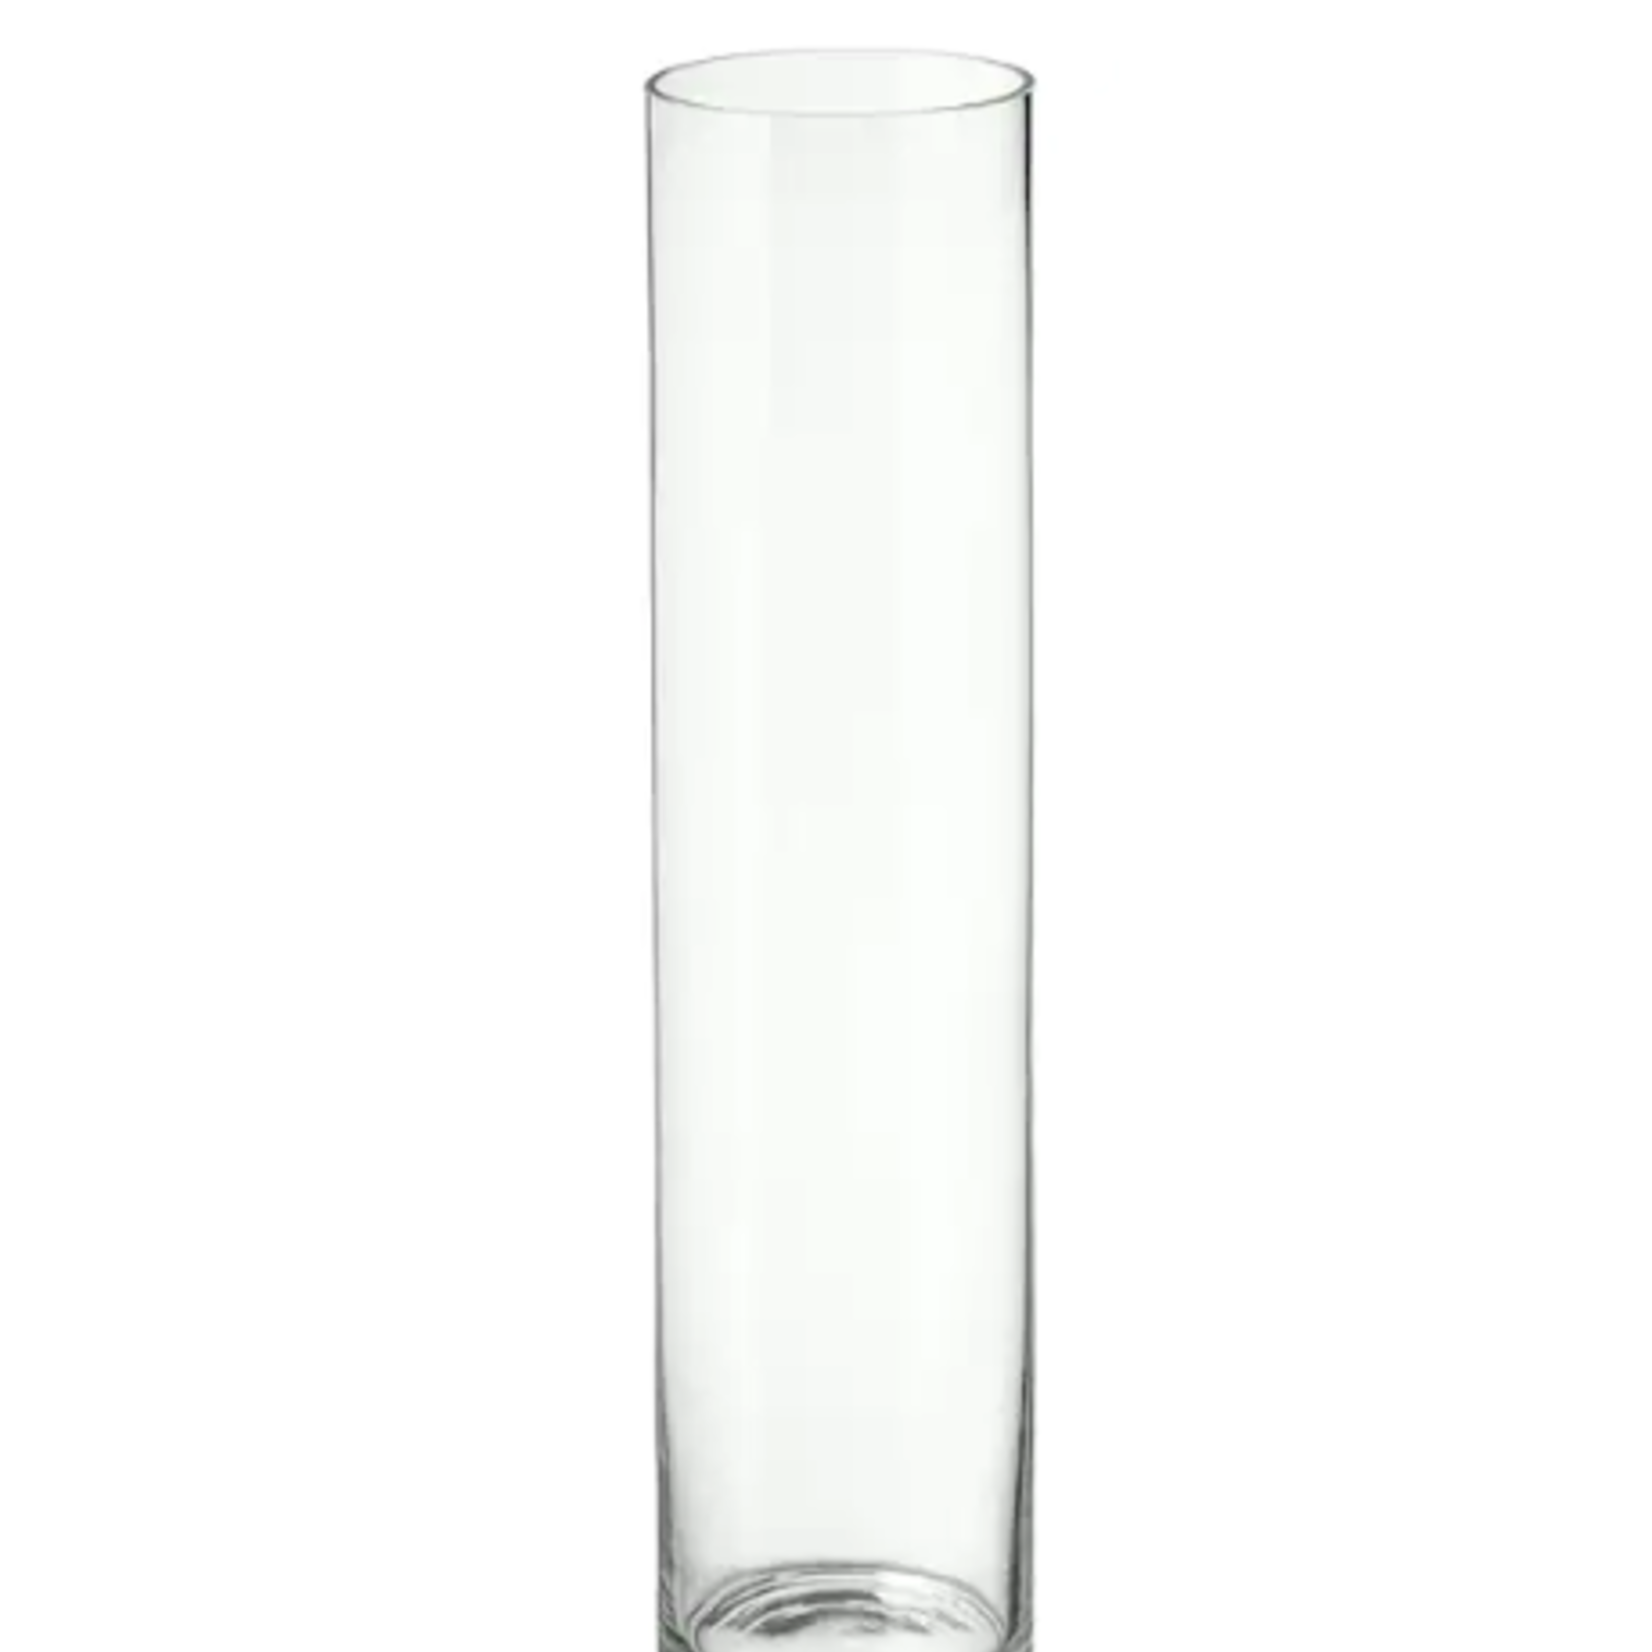 24"H X 8"D CLEAR GLASS CYLINDER VASE